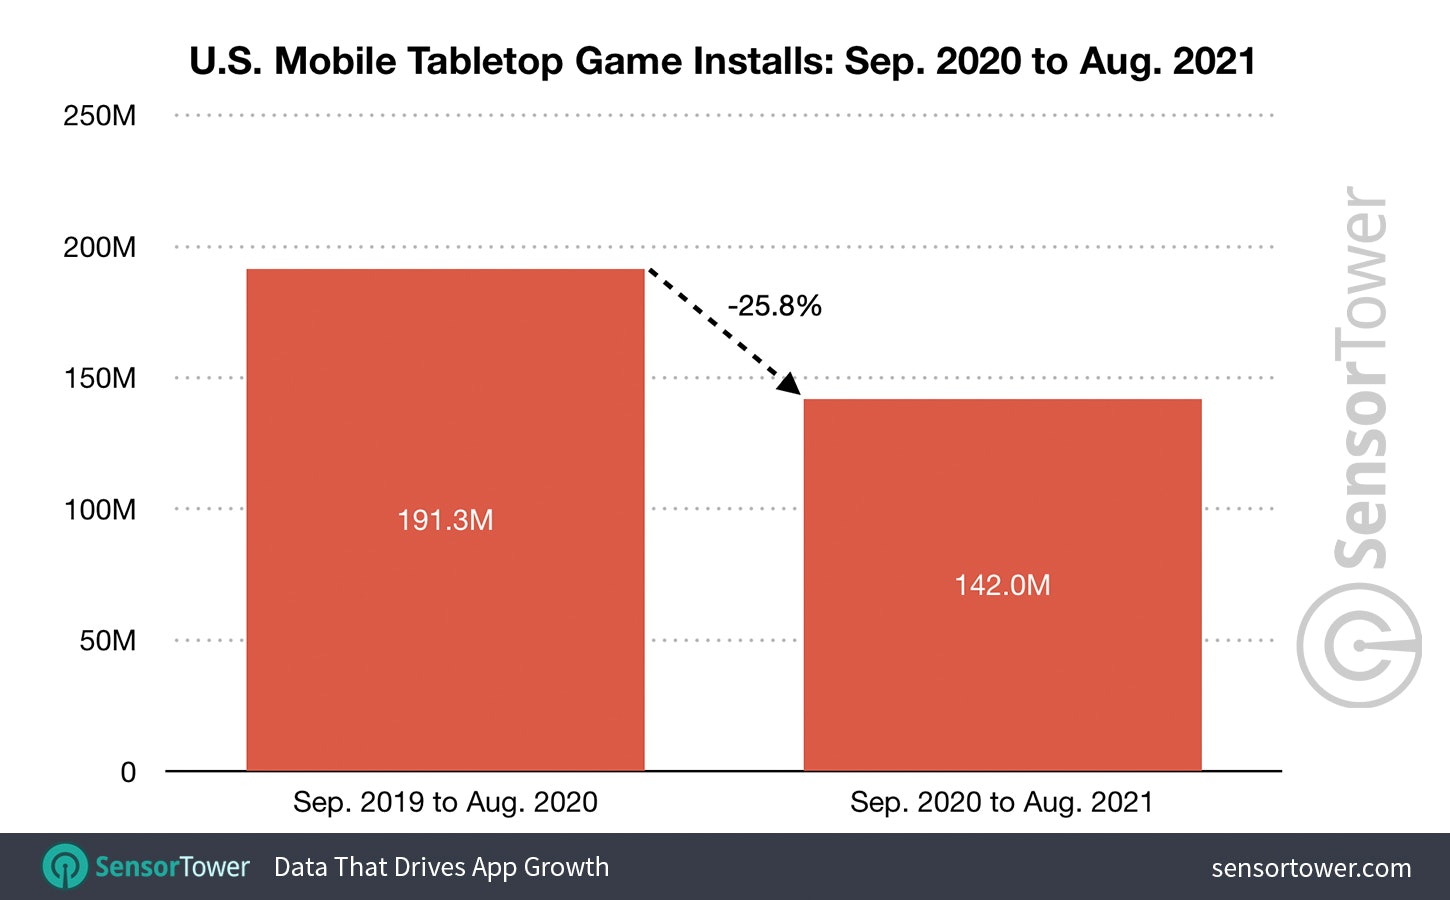 Mobile tabletop game installs